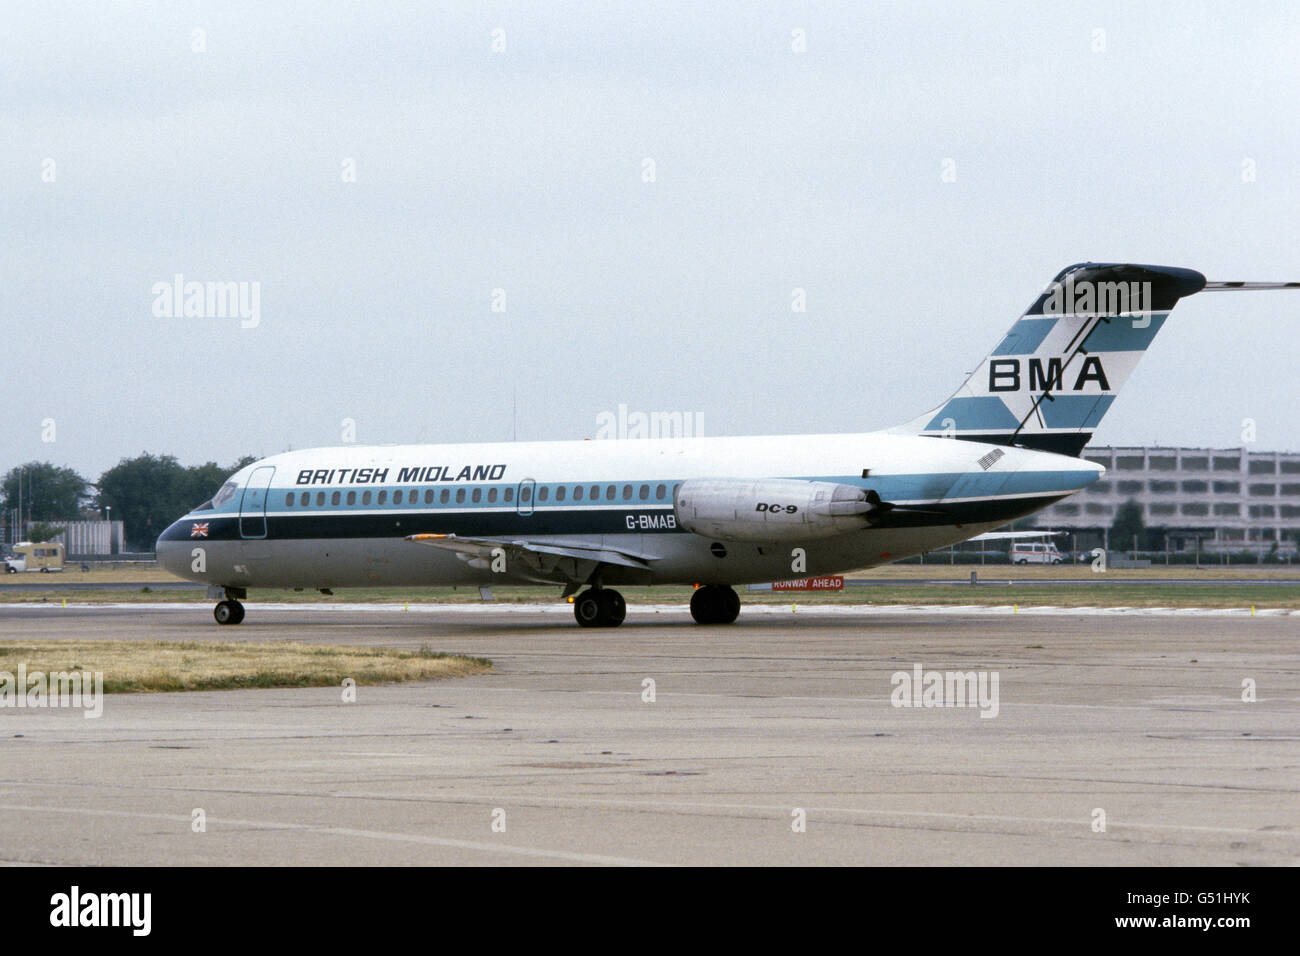 A British Midland Airways DC9 at London's Heathrow Airport Stock Photo